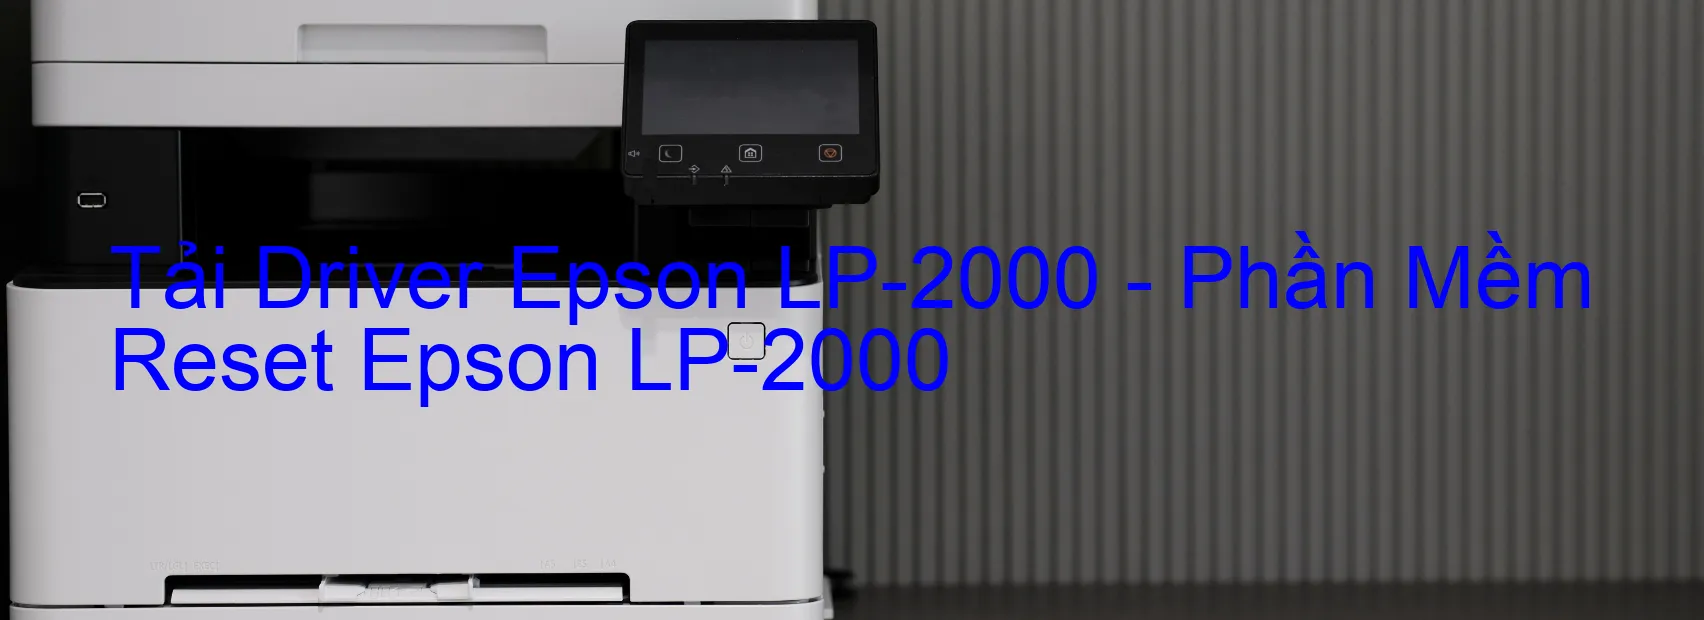 Driver Epson LP-2000, Phần Mềm Reset Epson LP-2000